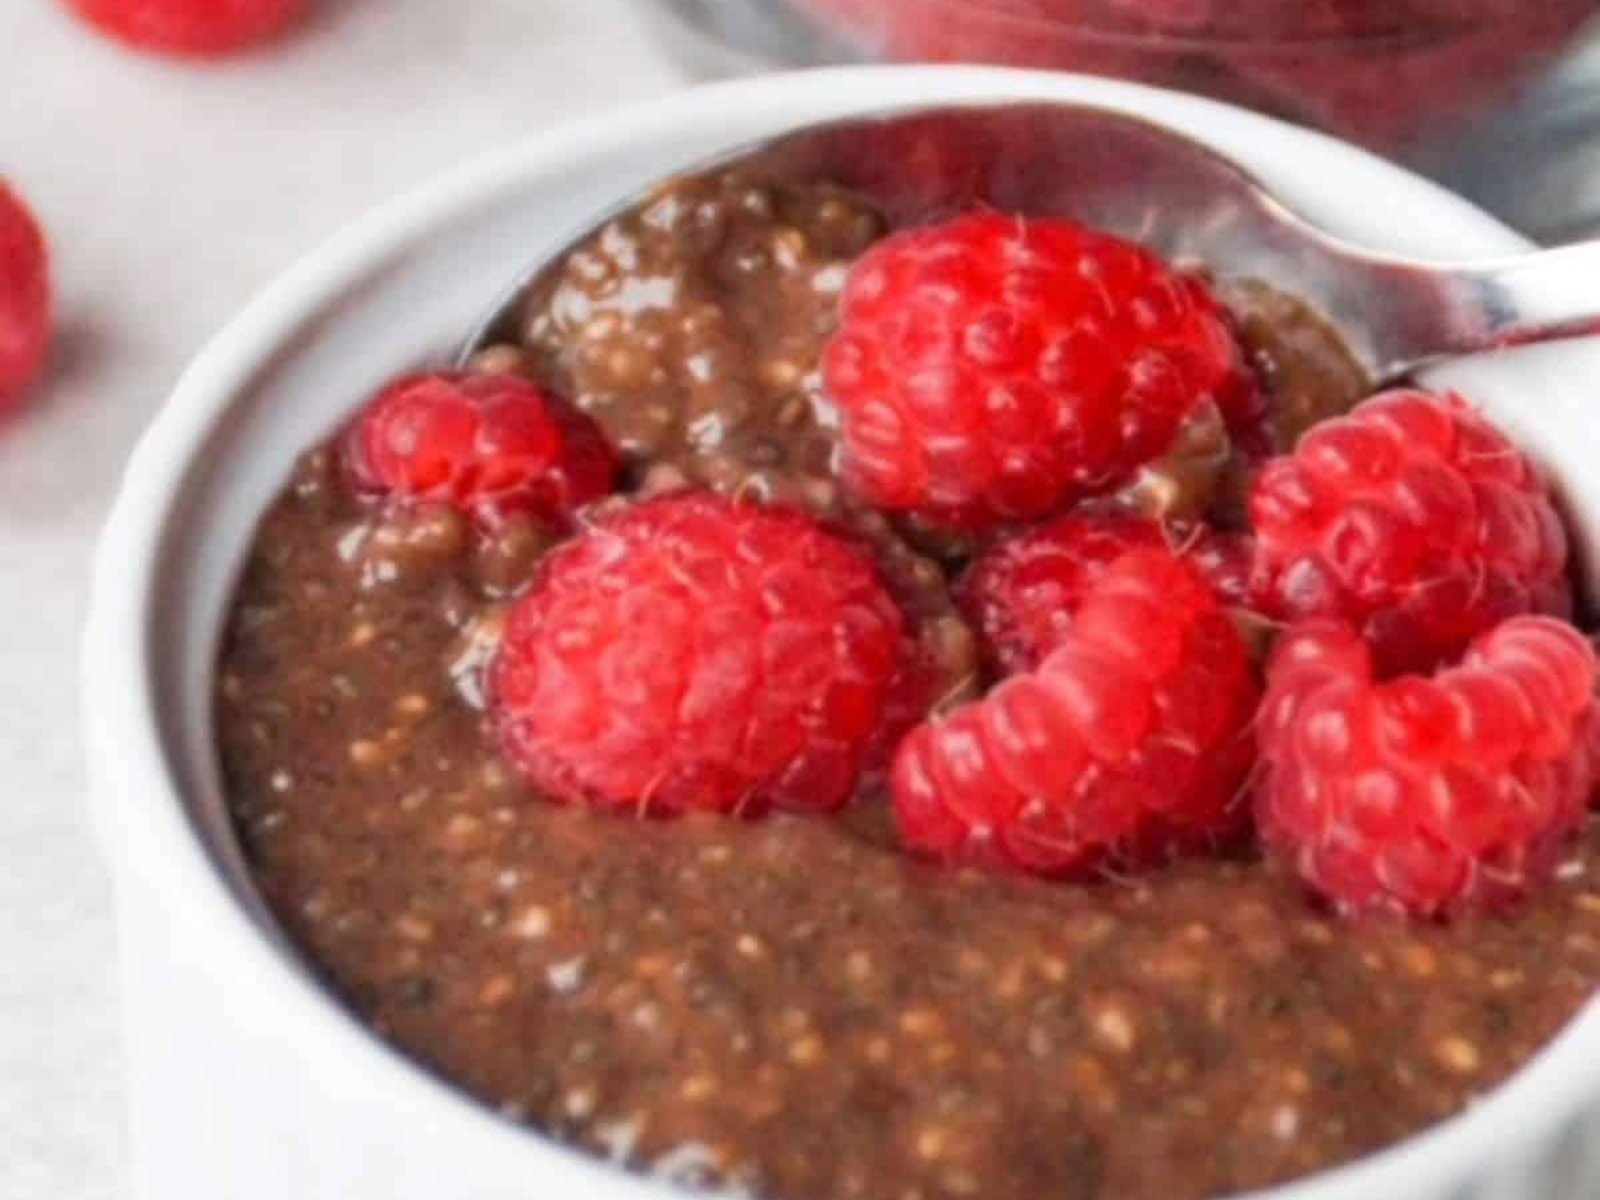 Chocolate Chia Pudding with raspberries